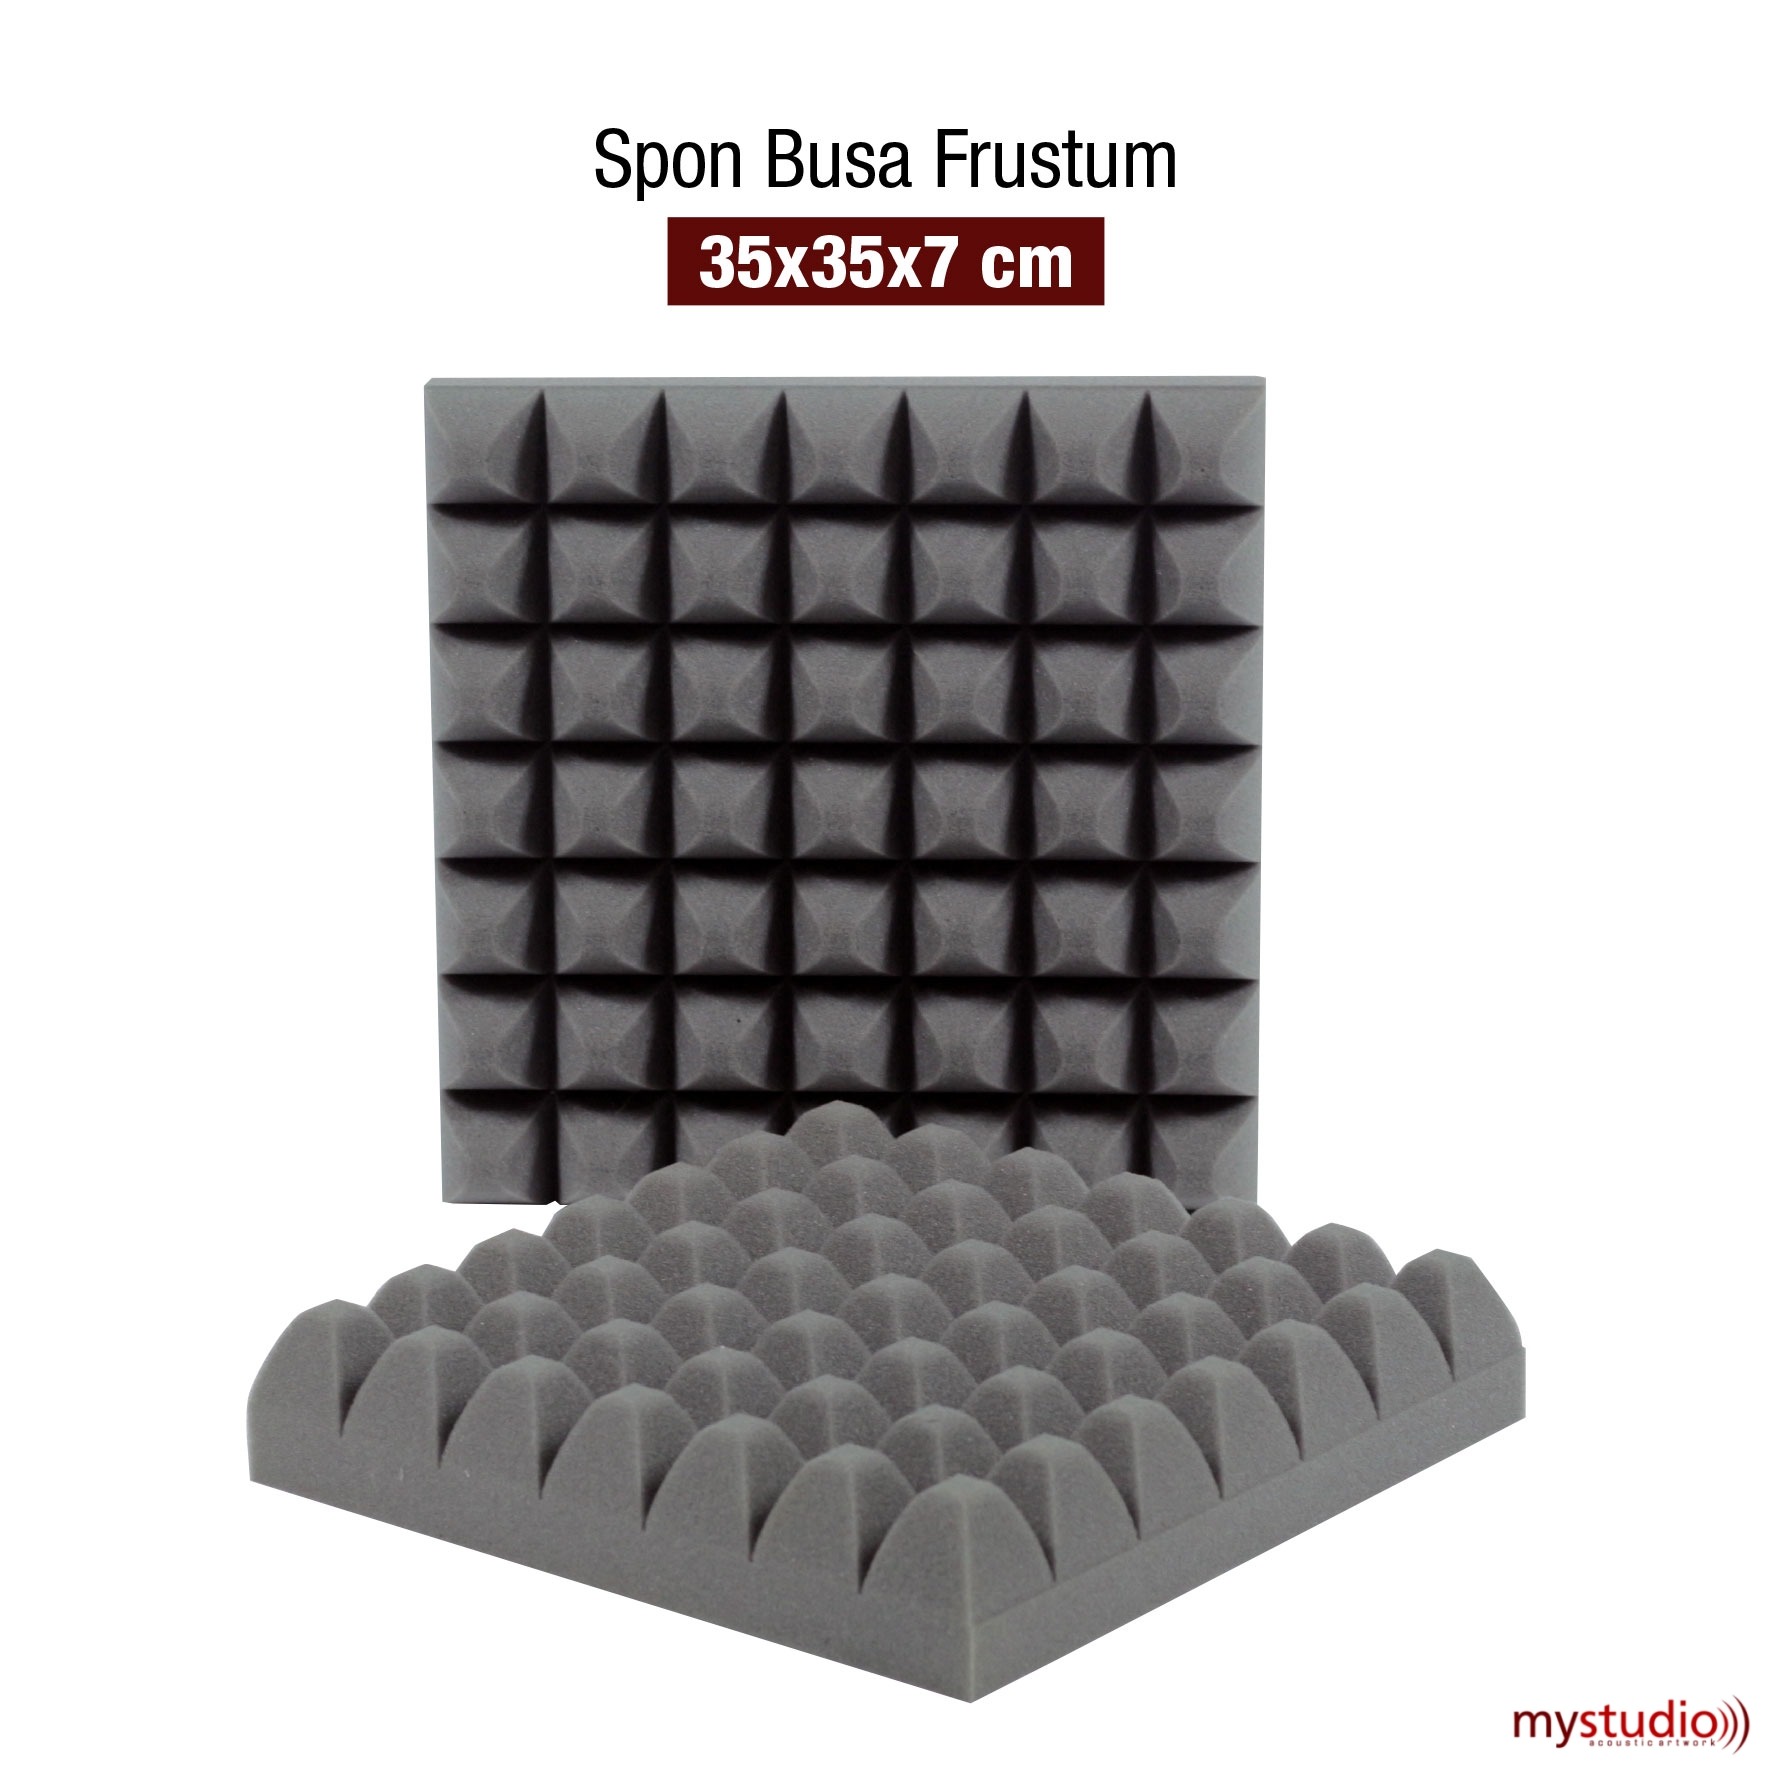 Spon Busa Frustum - Produk Mystudio